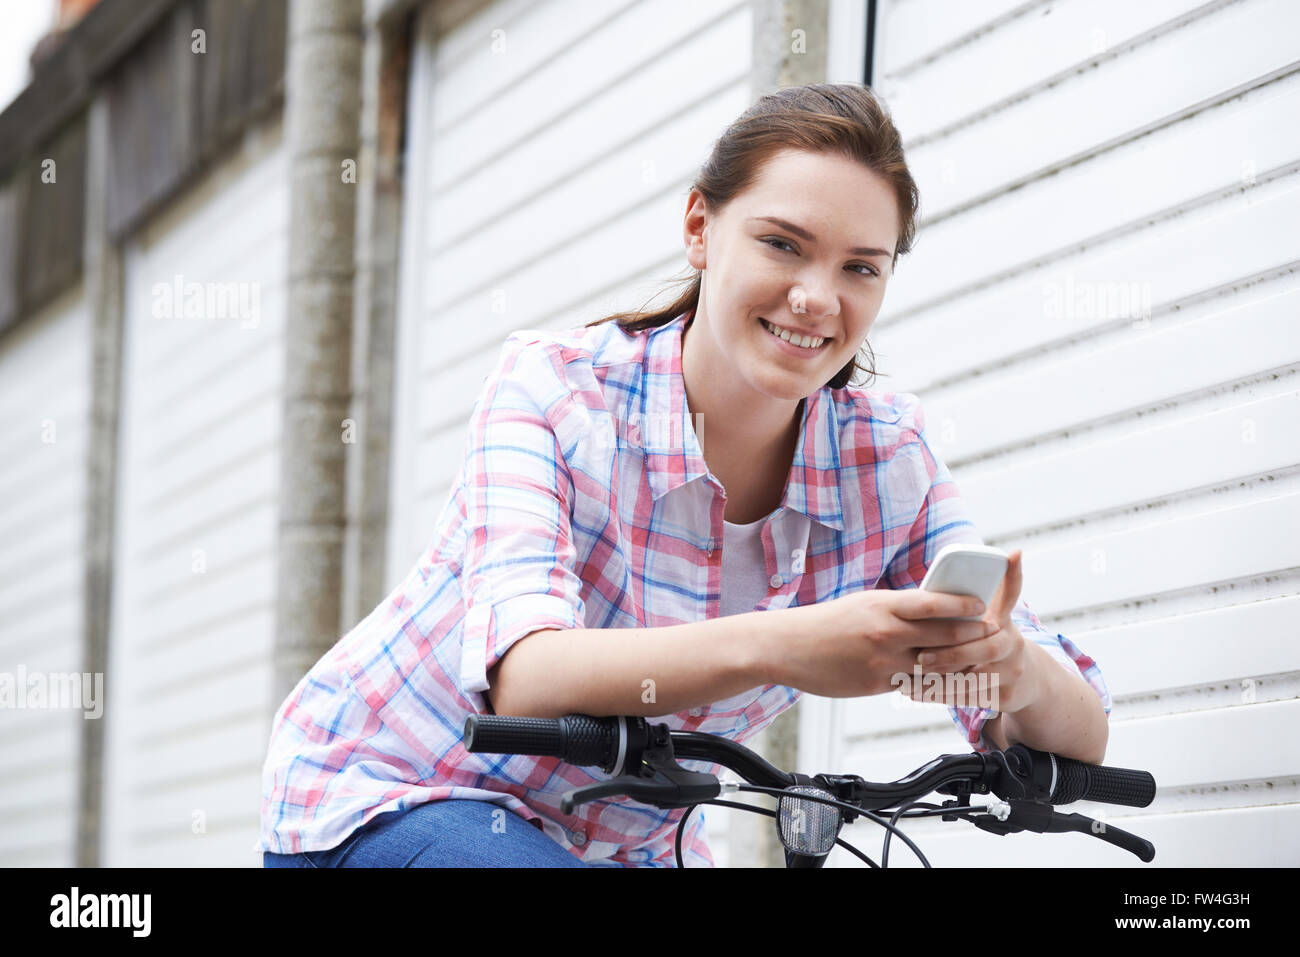 Teenage Girl On Bike Texting On Mobile Phone Stock Photo